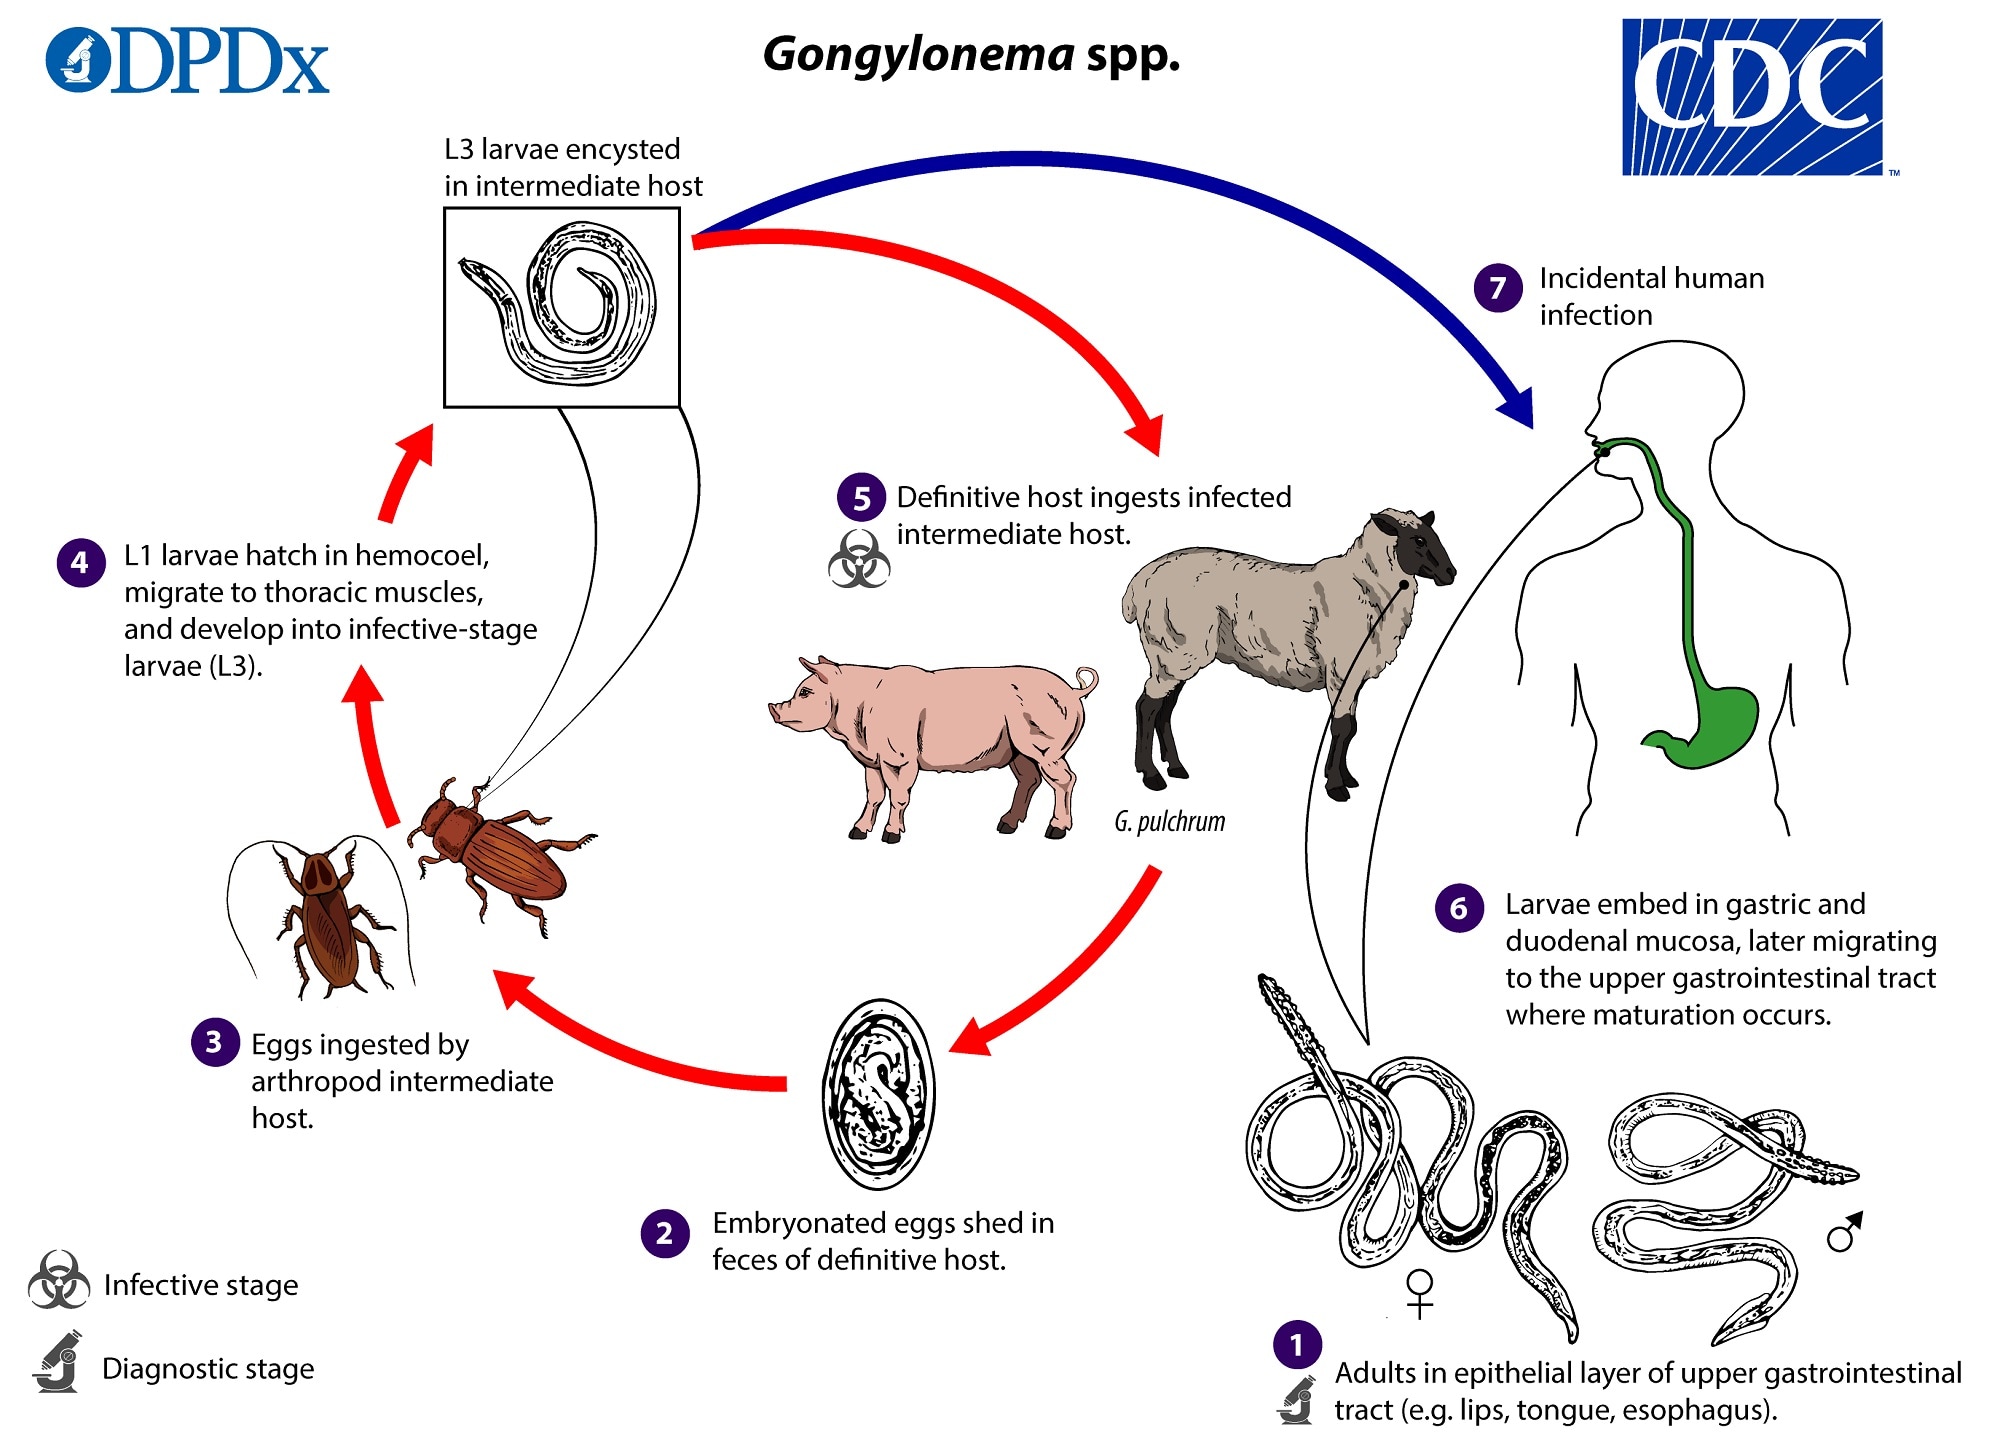 CDC - DPDx - Gongylonema infection